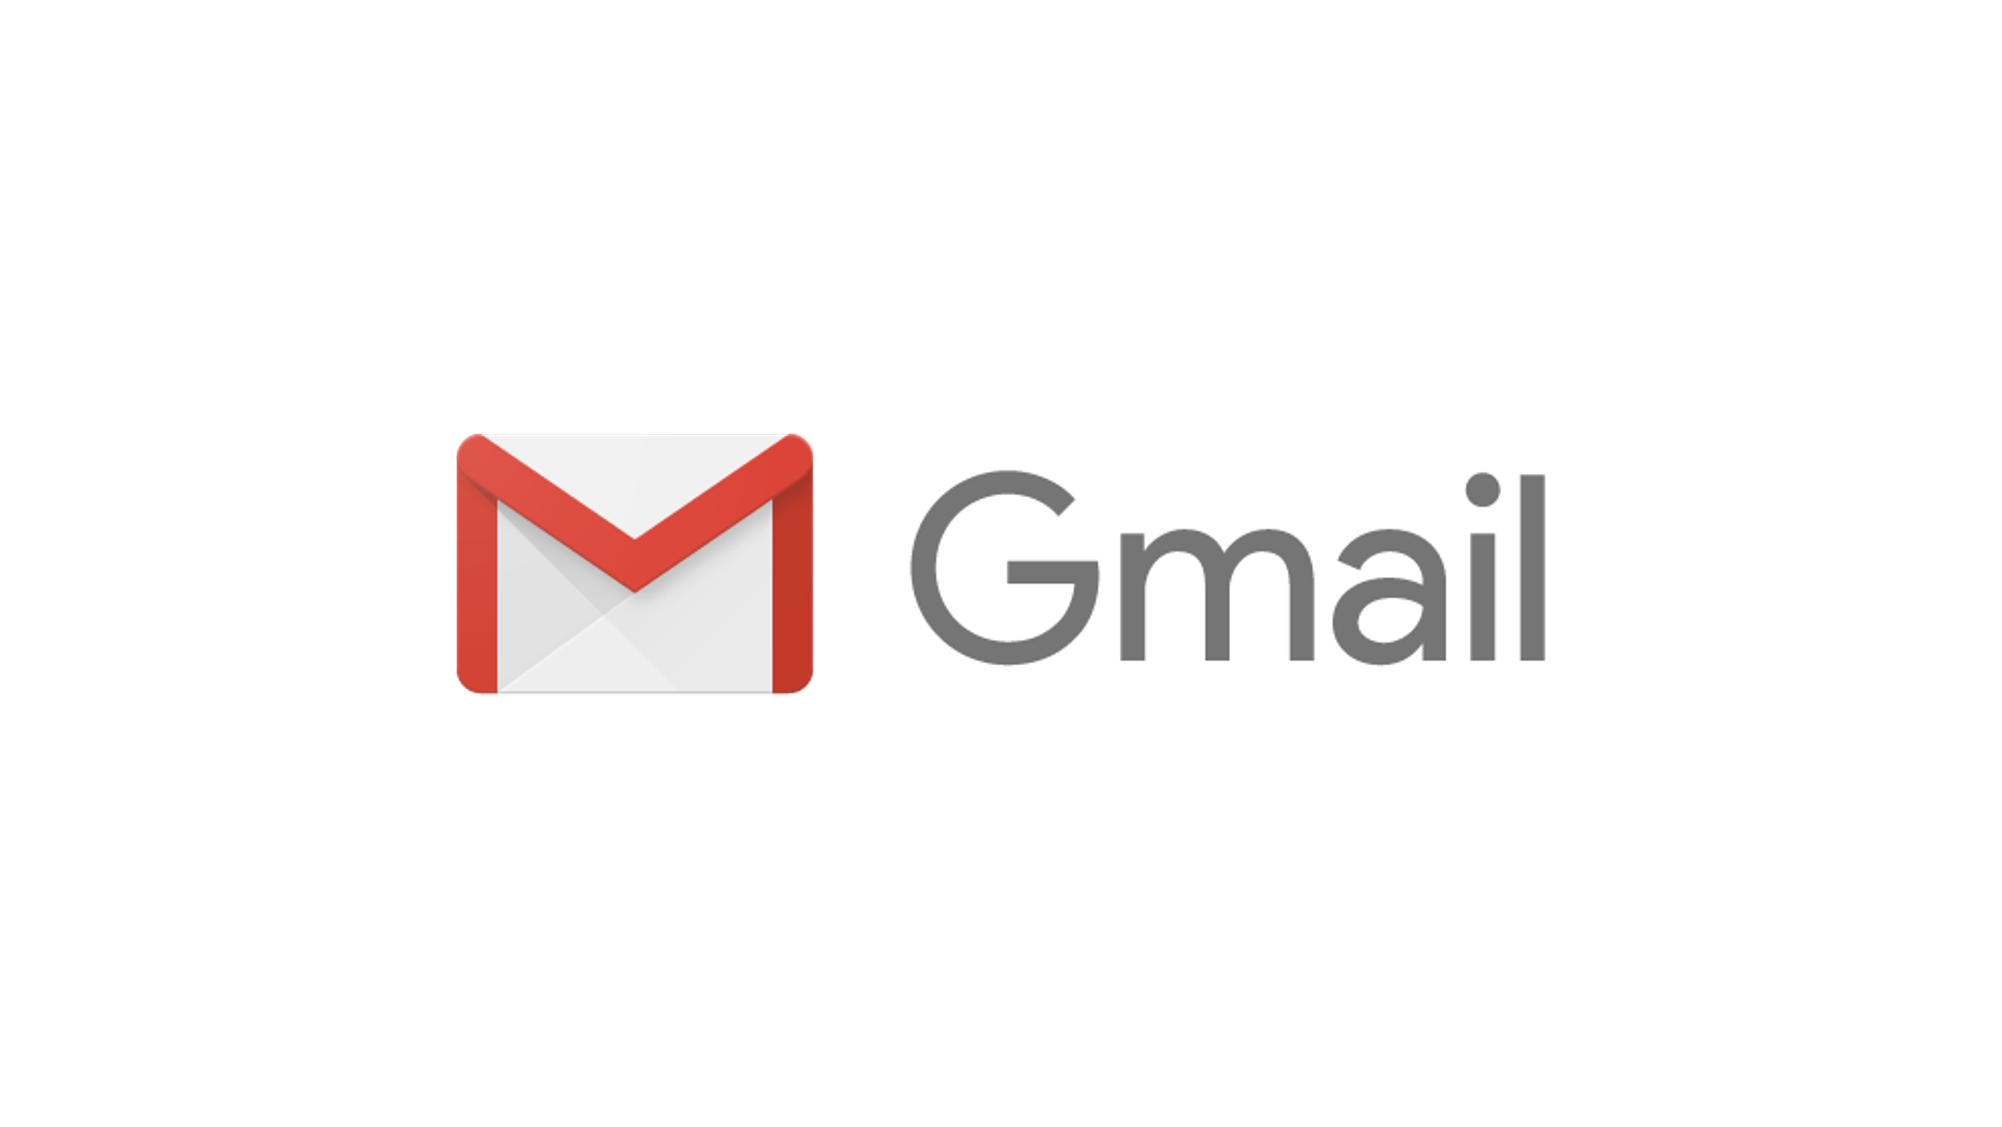 Gmail video. Gmail картинка. Gmail почта. Логотип гмаил. Gmail логотип PNG.